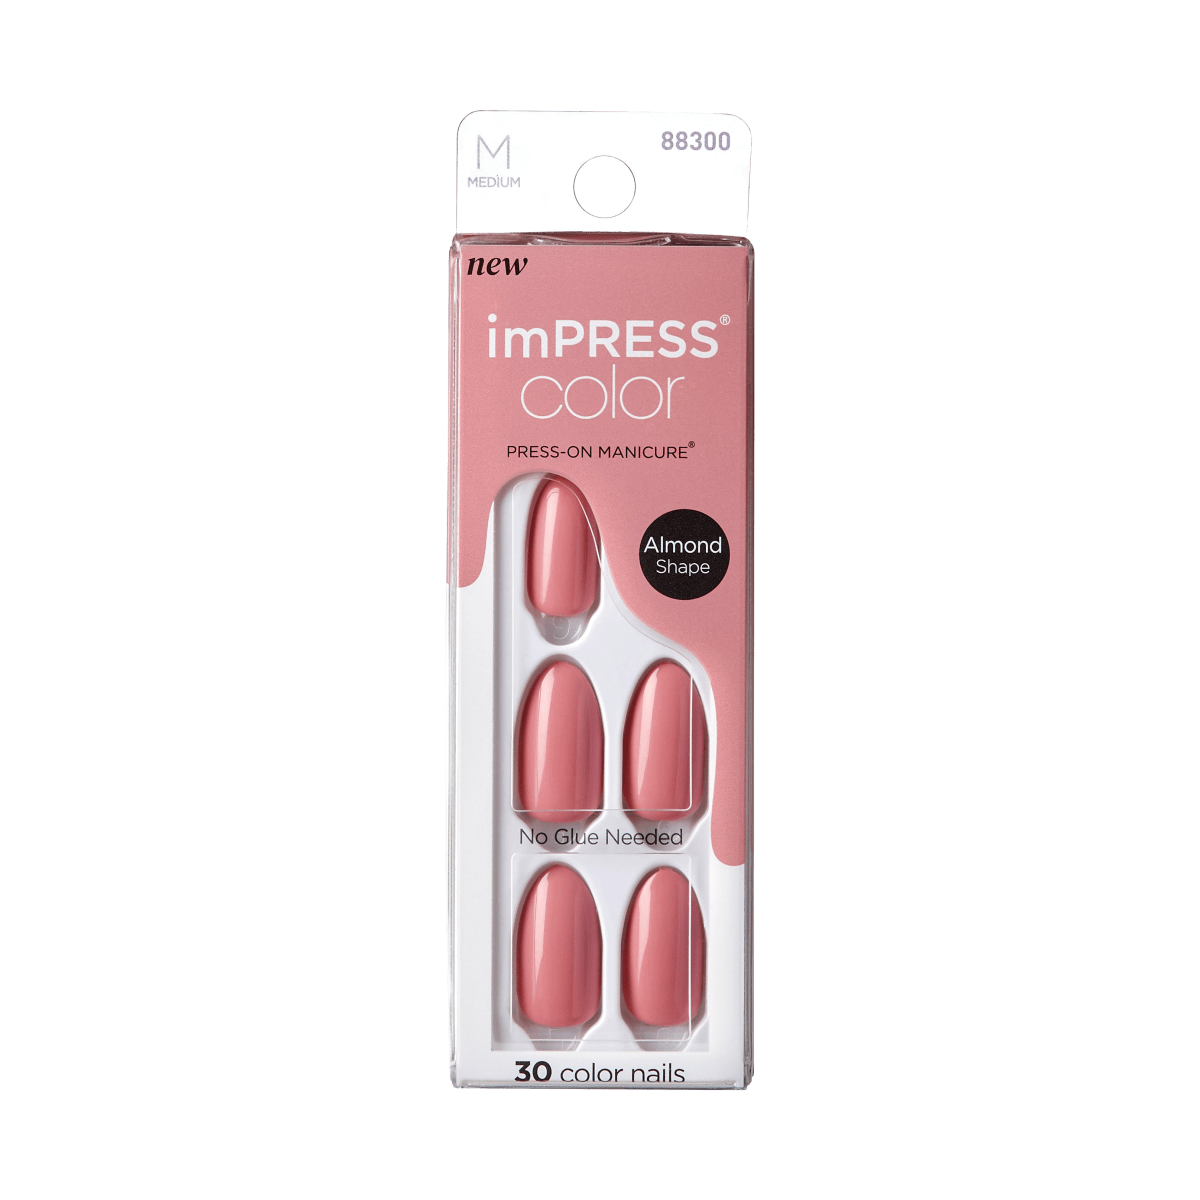 imPRESS Color Press-On Manicure - Sweet Aroma